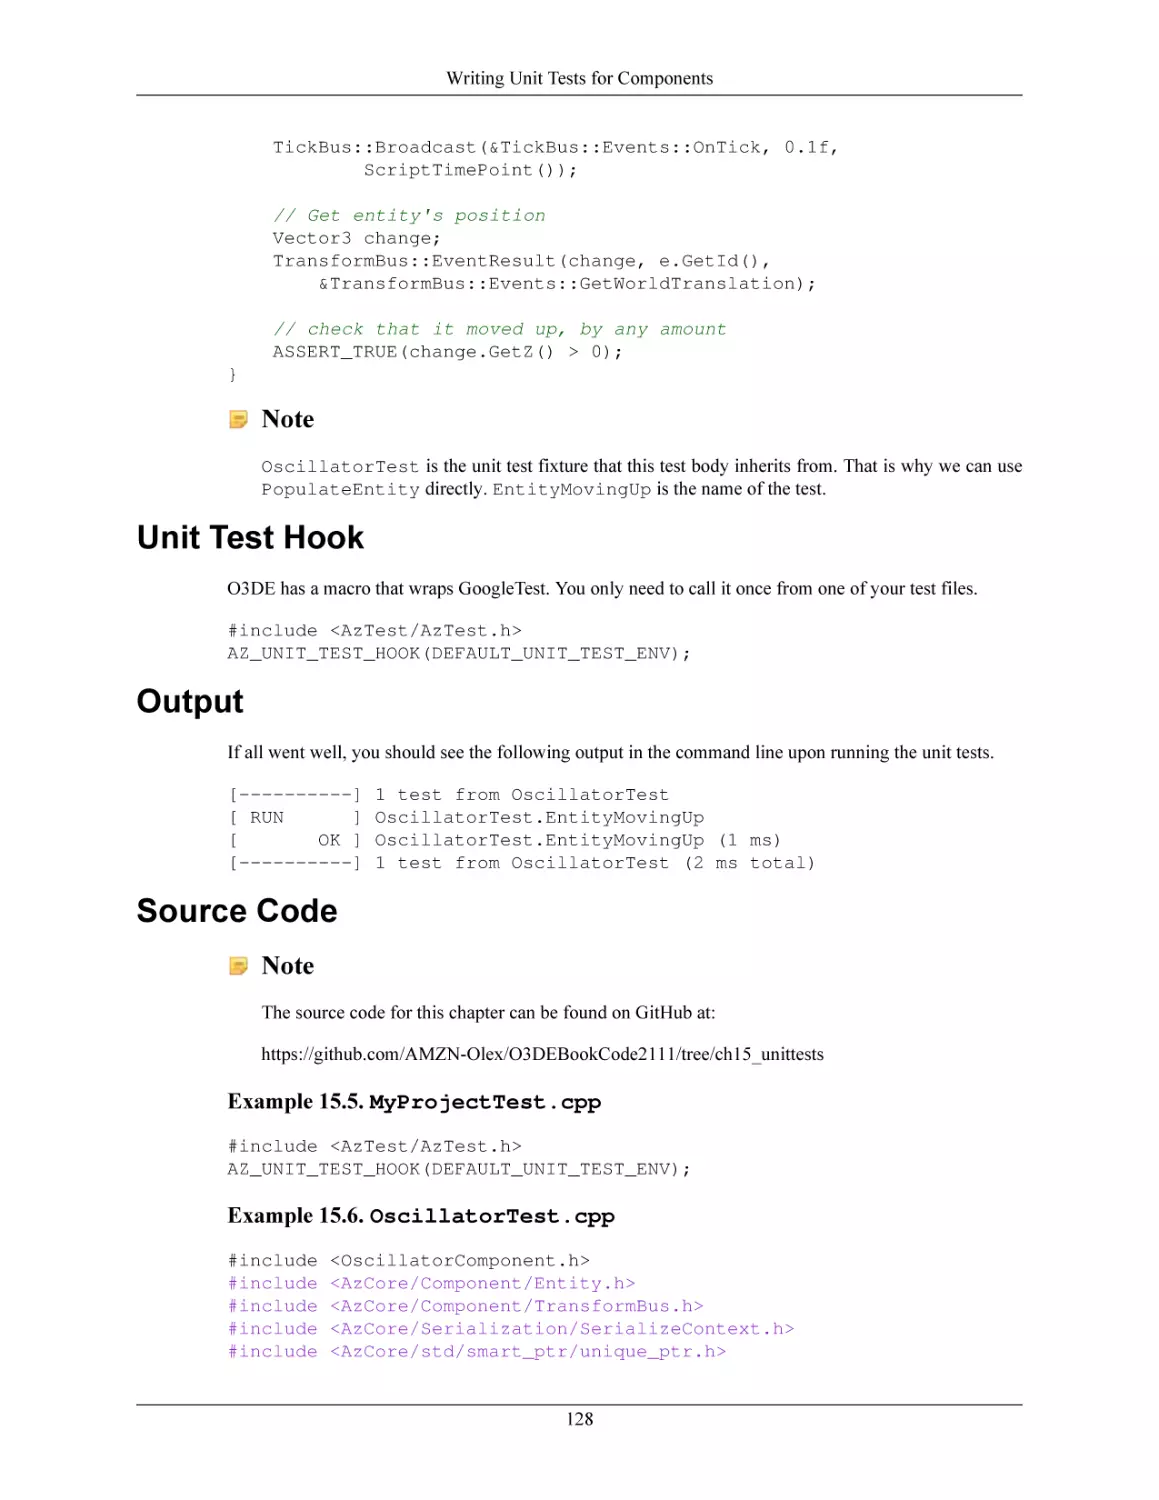 Unit Test Hook
Output
Source Code